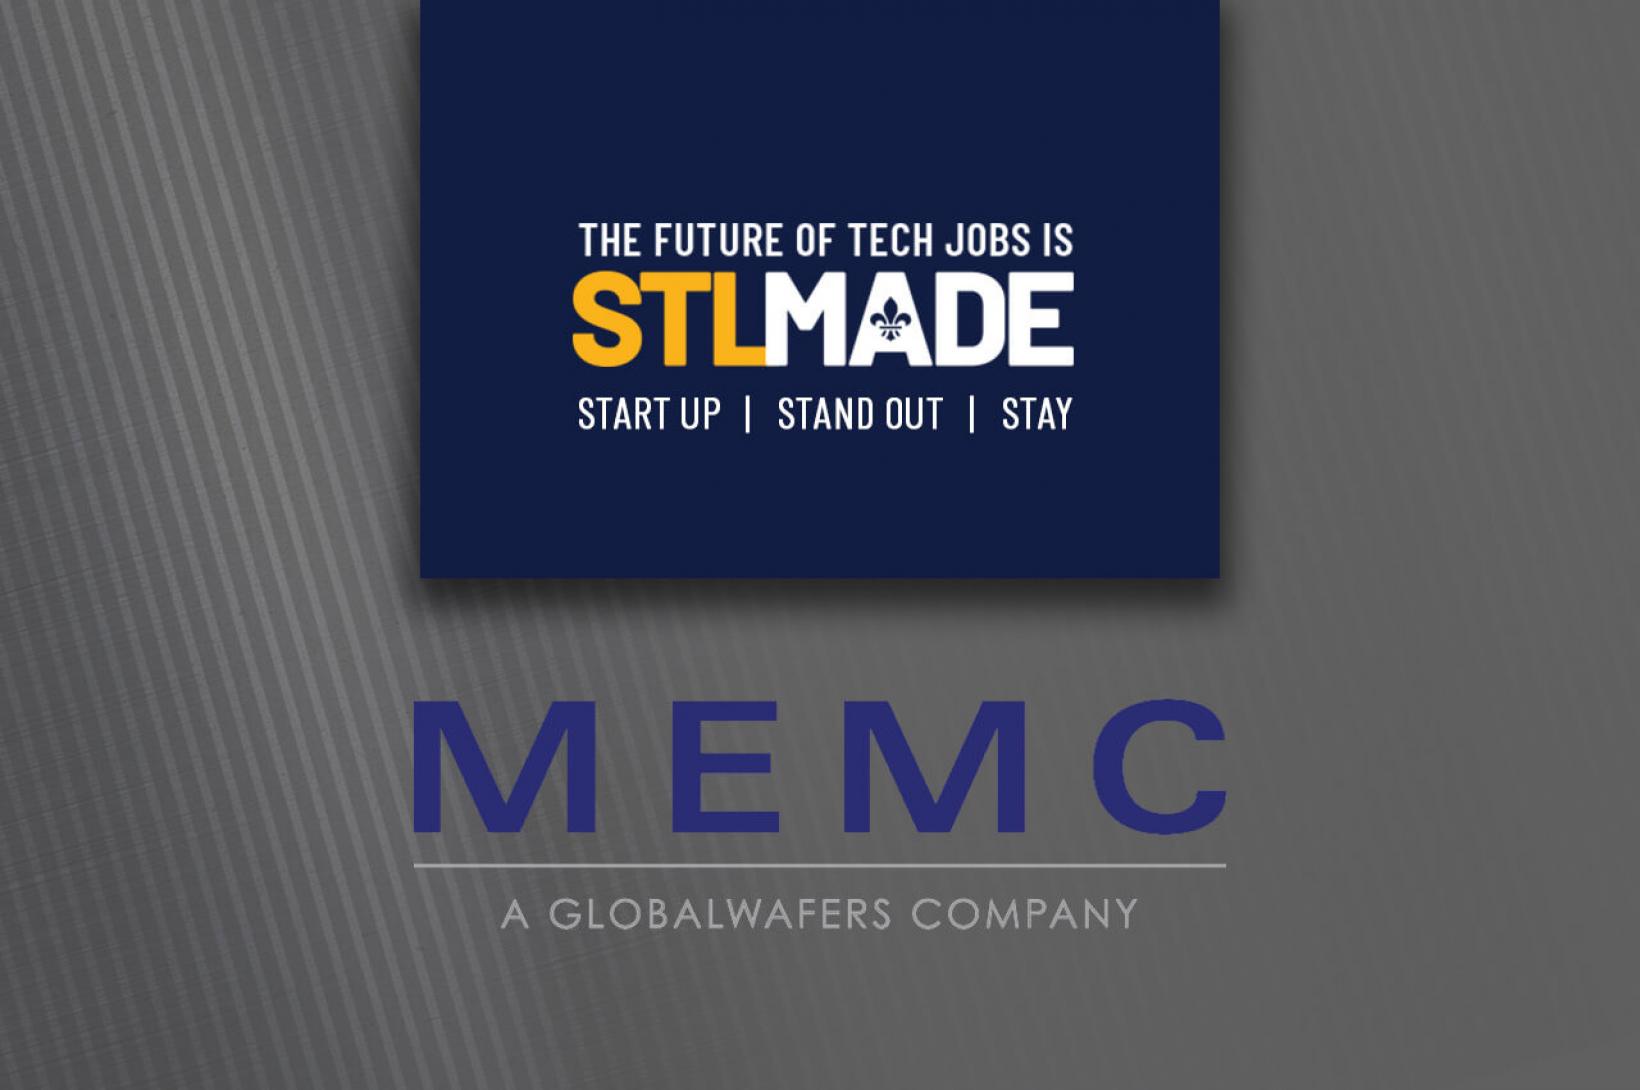 The Future of Tech Jobs is STLMADE MEMC